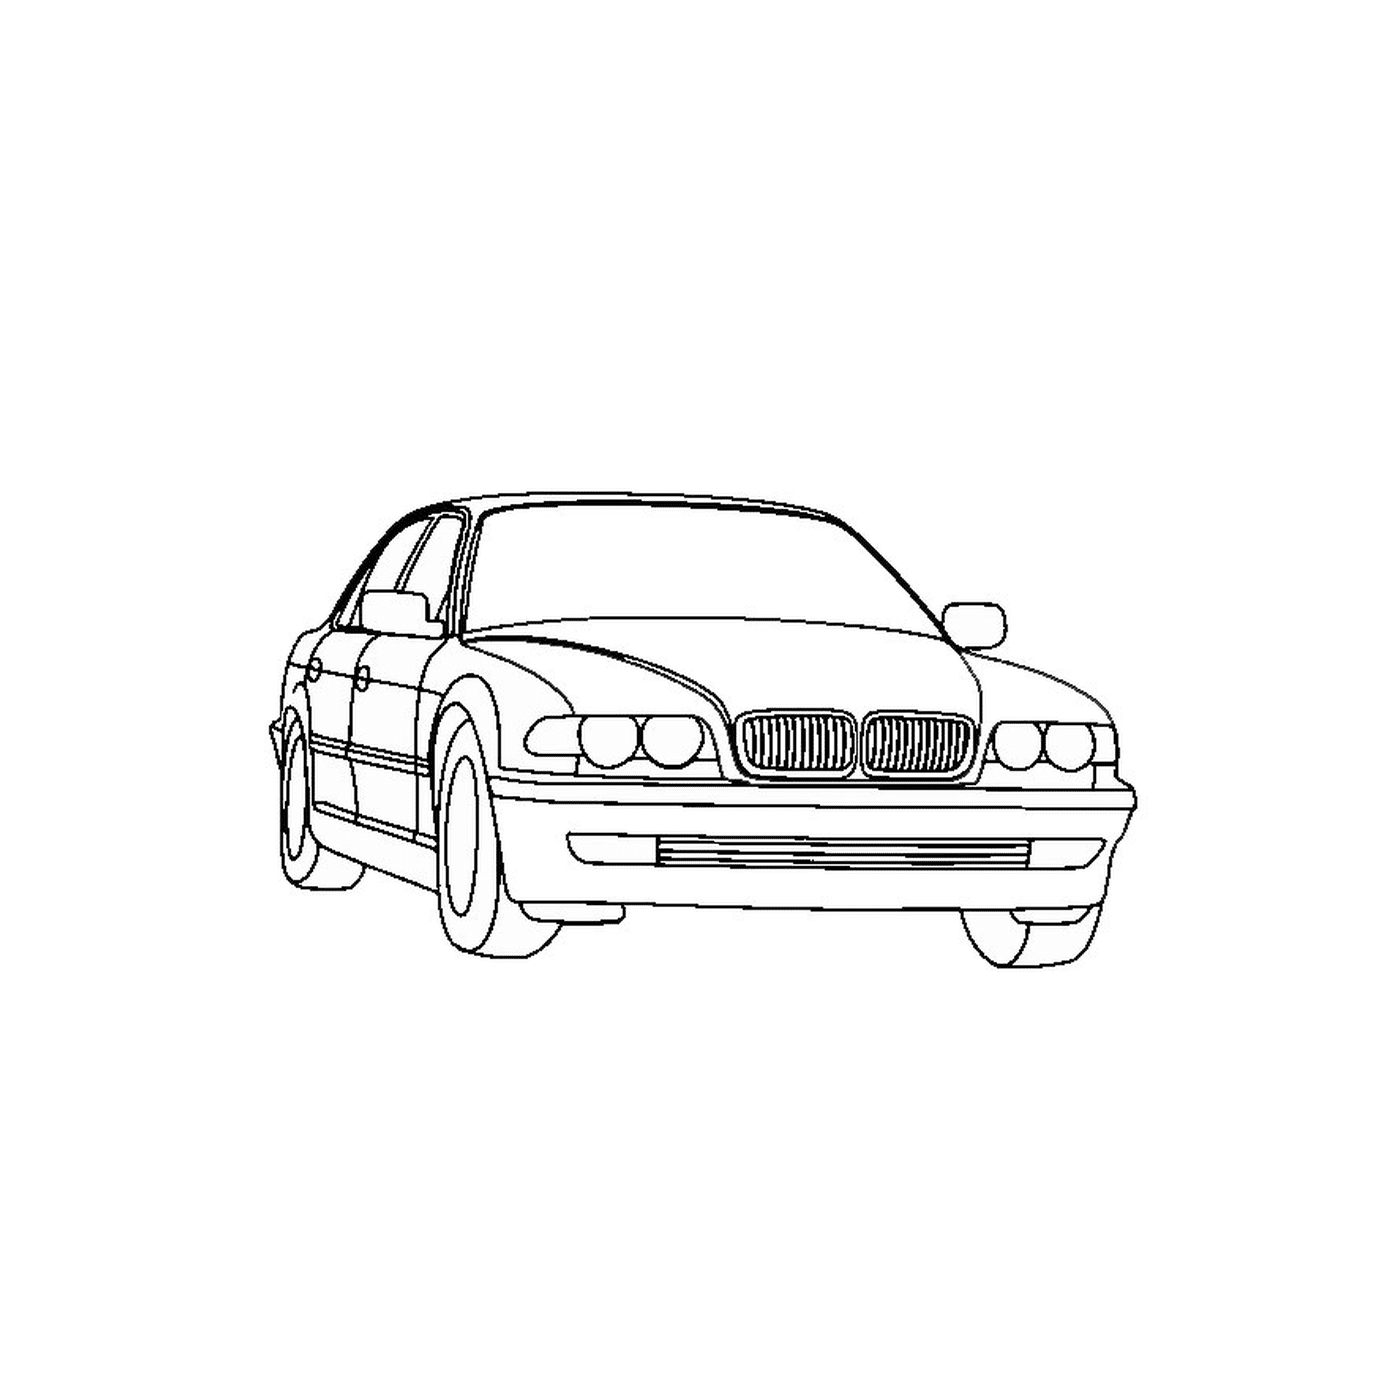  BMW rápido y moderno 